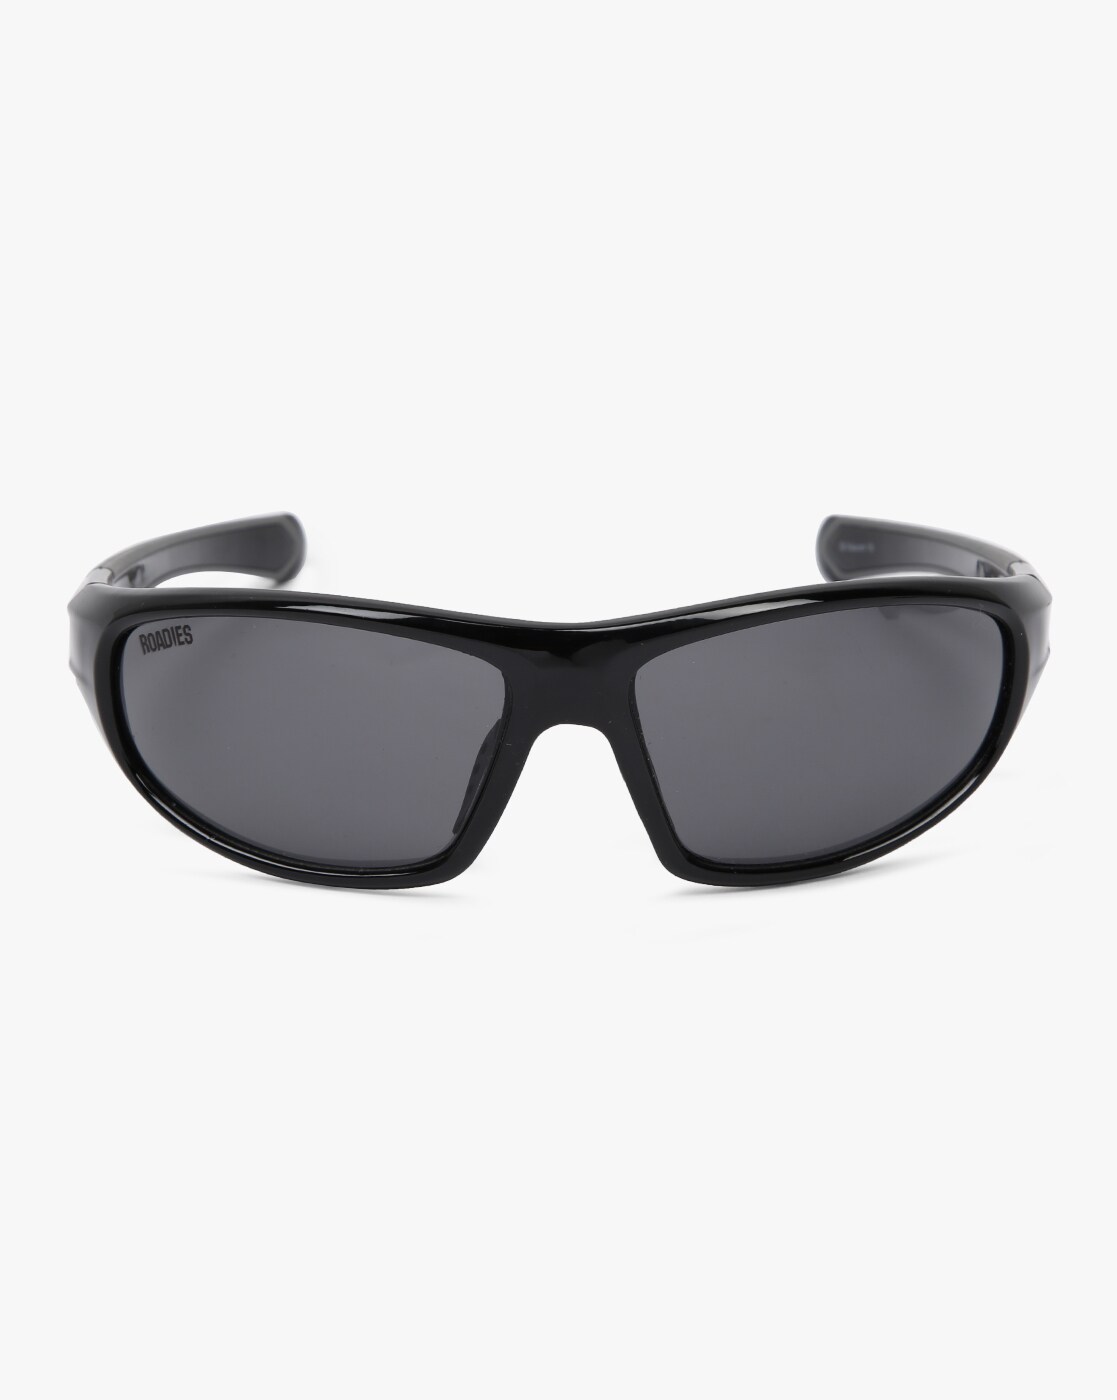 Pin by Pinner on Roadies | Mirrored sunglasses men, Mirrored sunglasses,  Round sunglass men